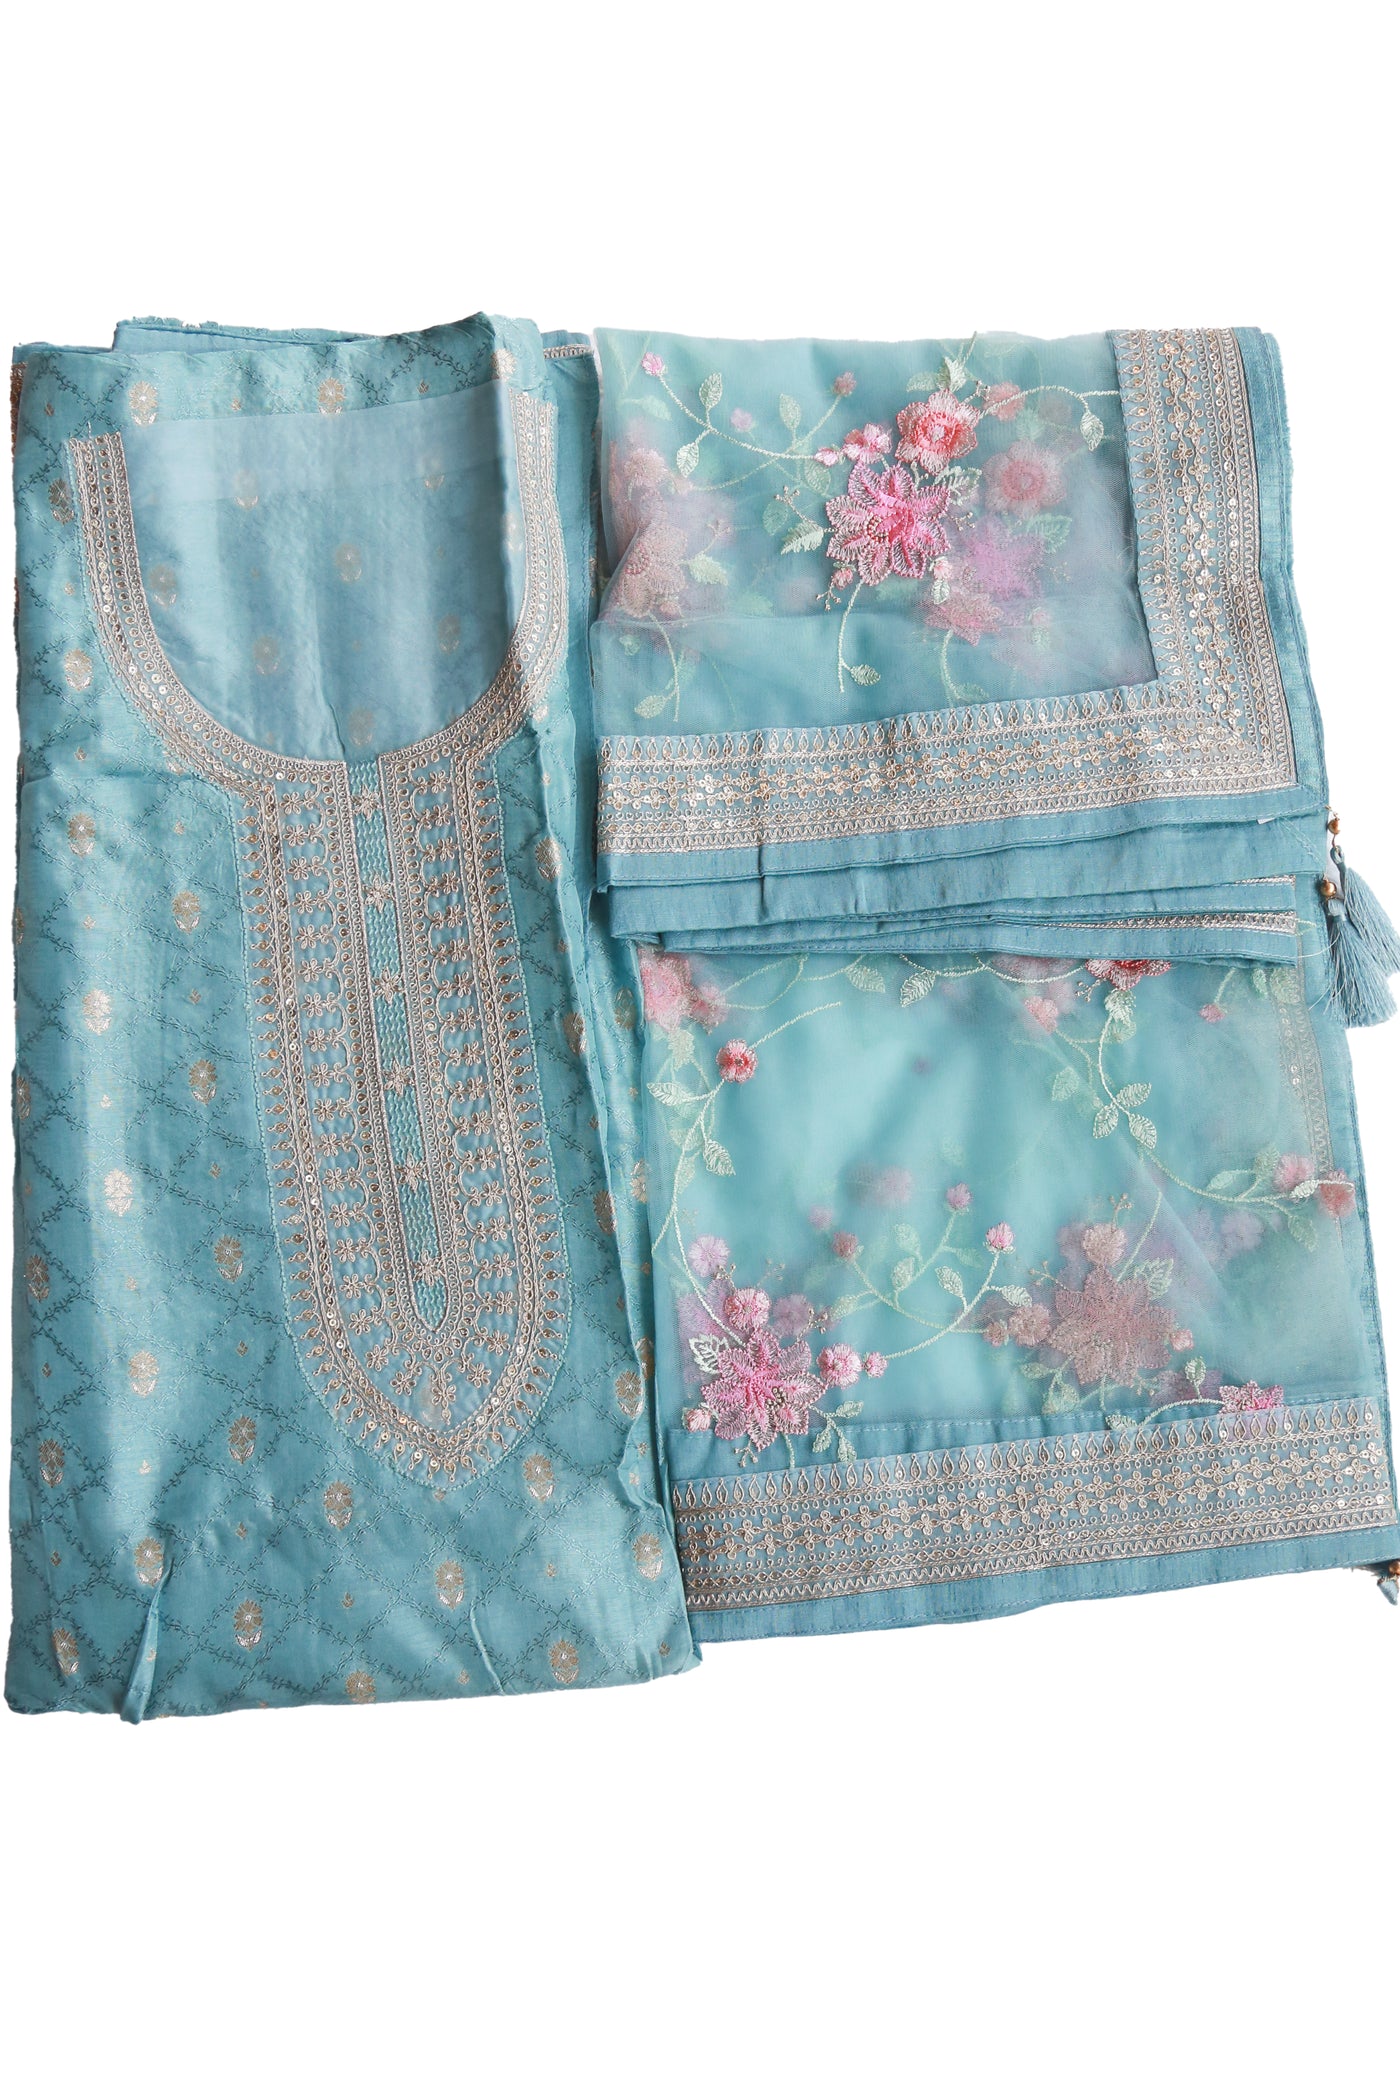 Firozi Dola Silk Zari Embroidered Suit Set